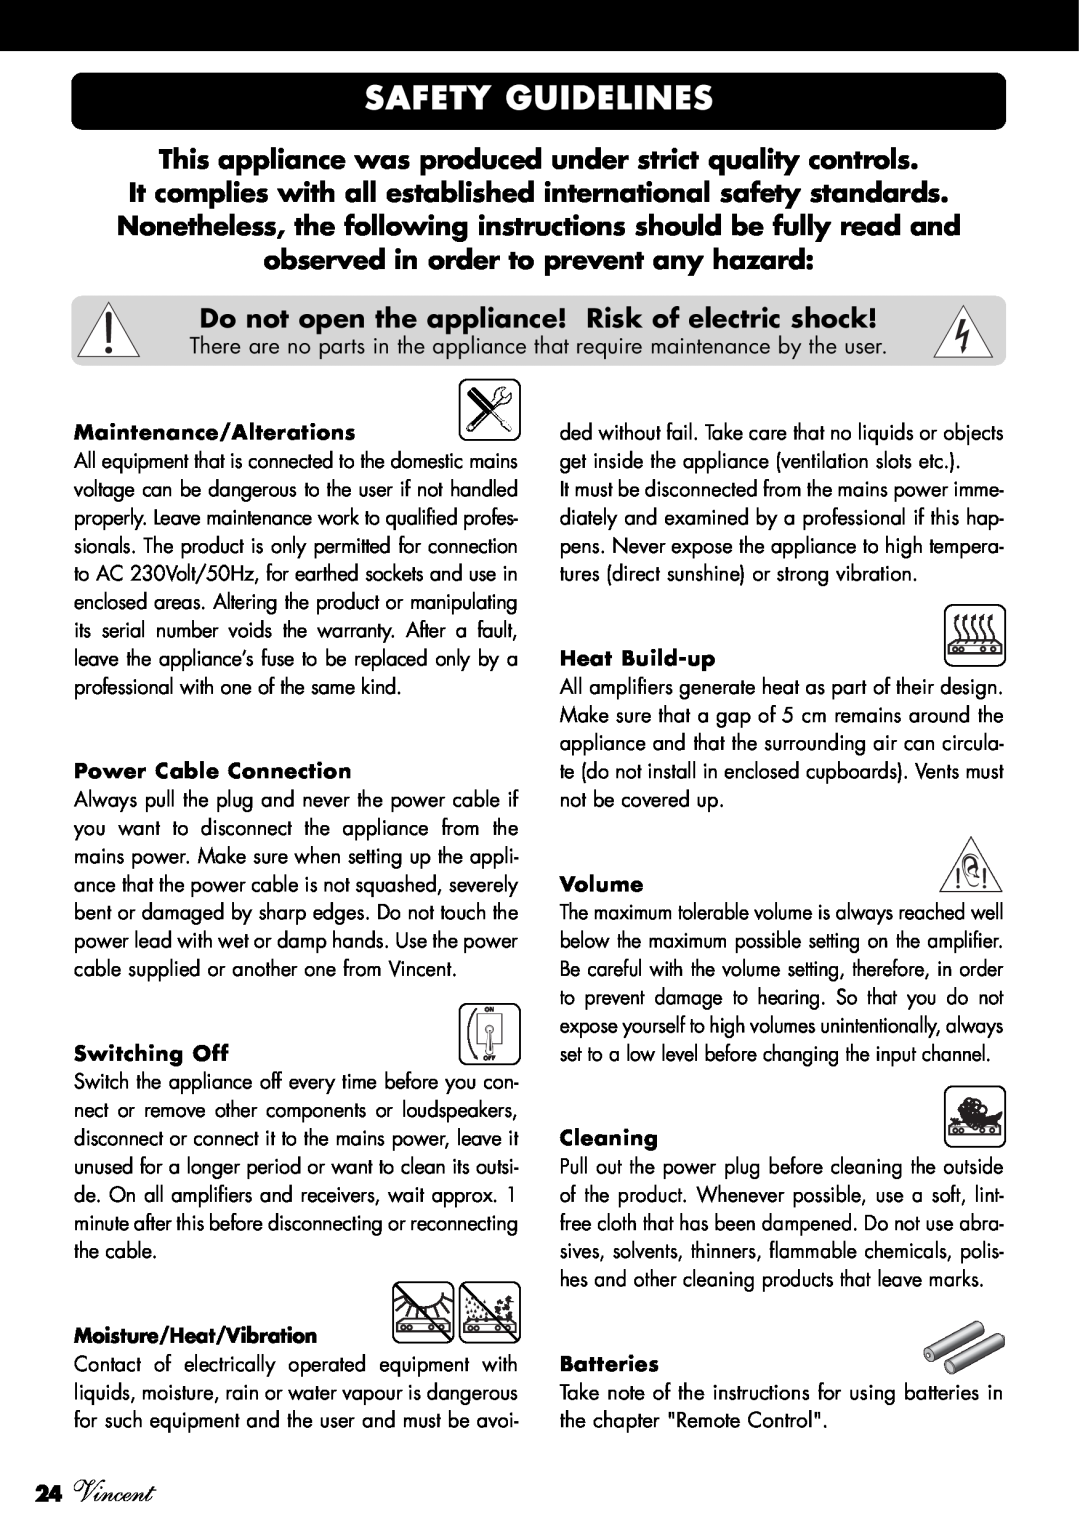 Vincent Audio SV-234 manuel dutilisation Safety Guidelines, 24Vincent, Do not open the appliance! Risk of electric shock 